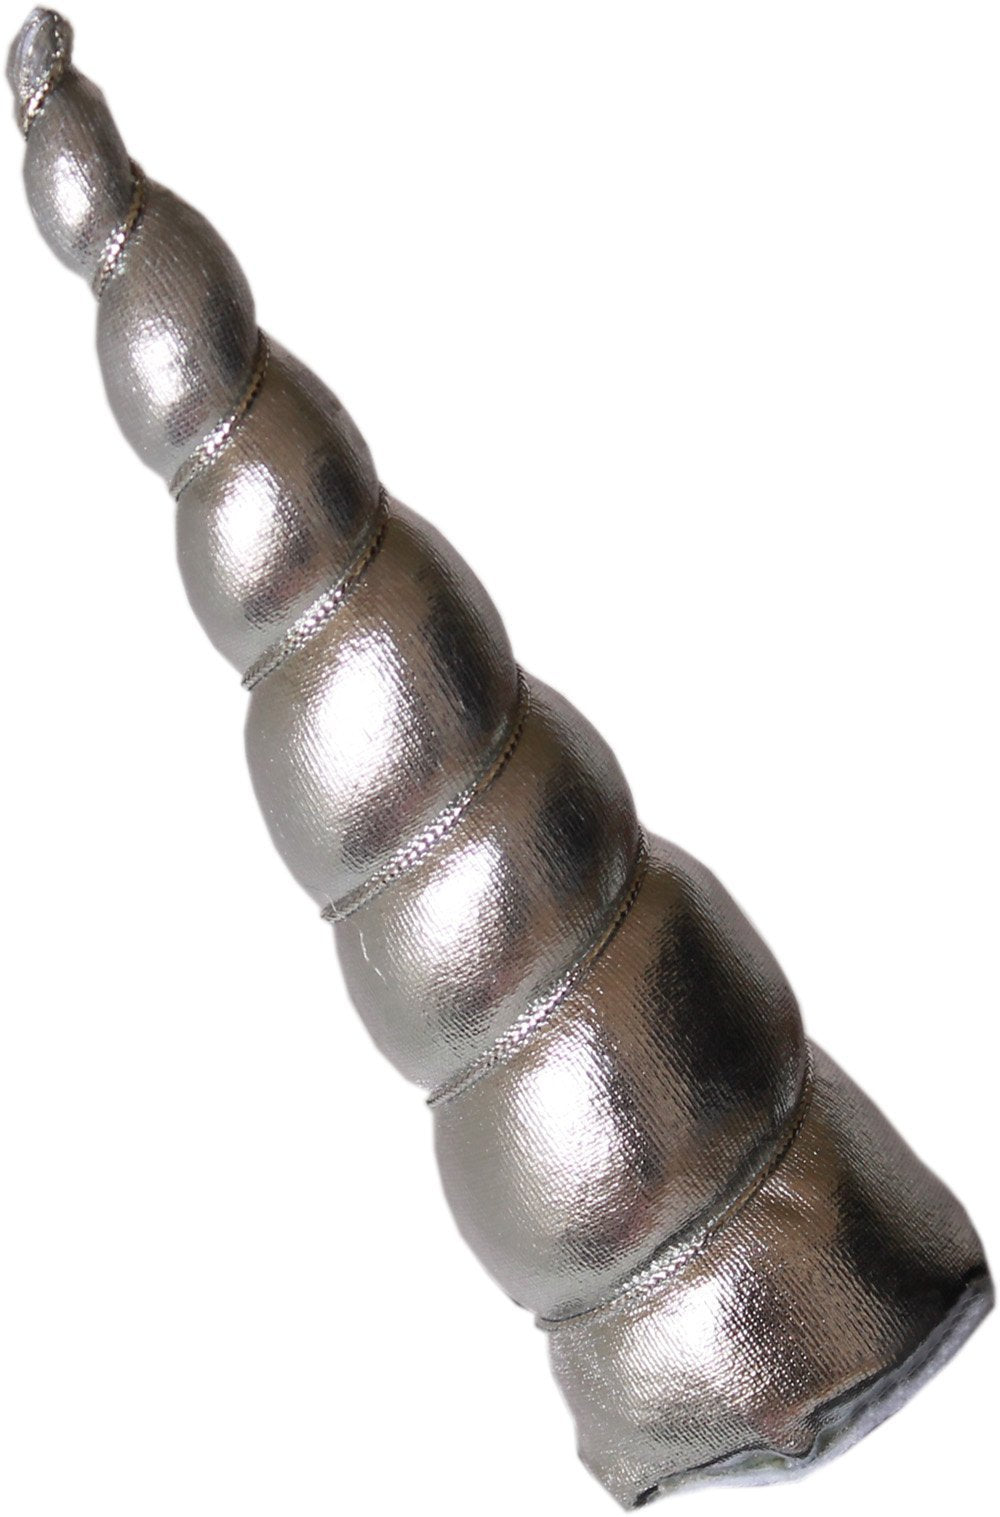 Metallic Unicorn Horn for Small and Medium Pets